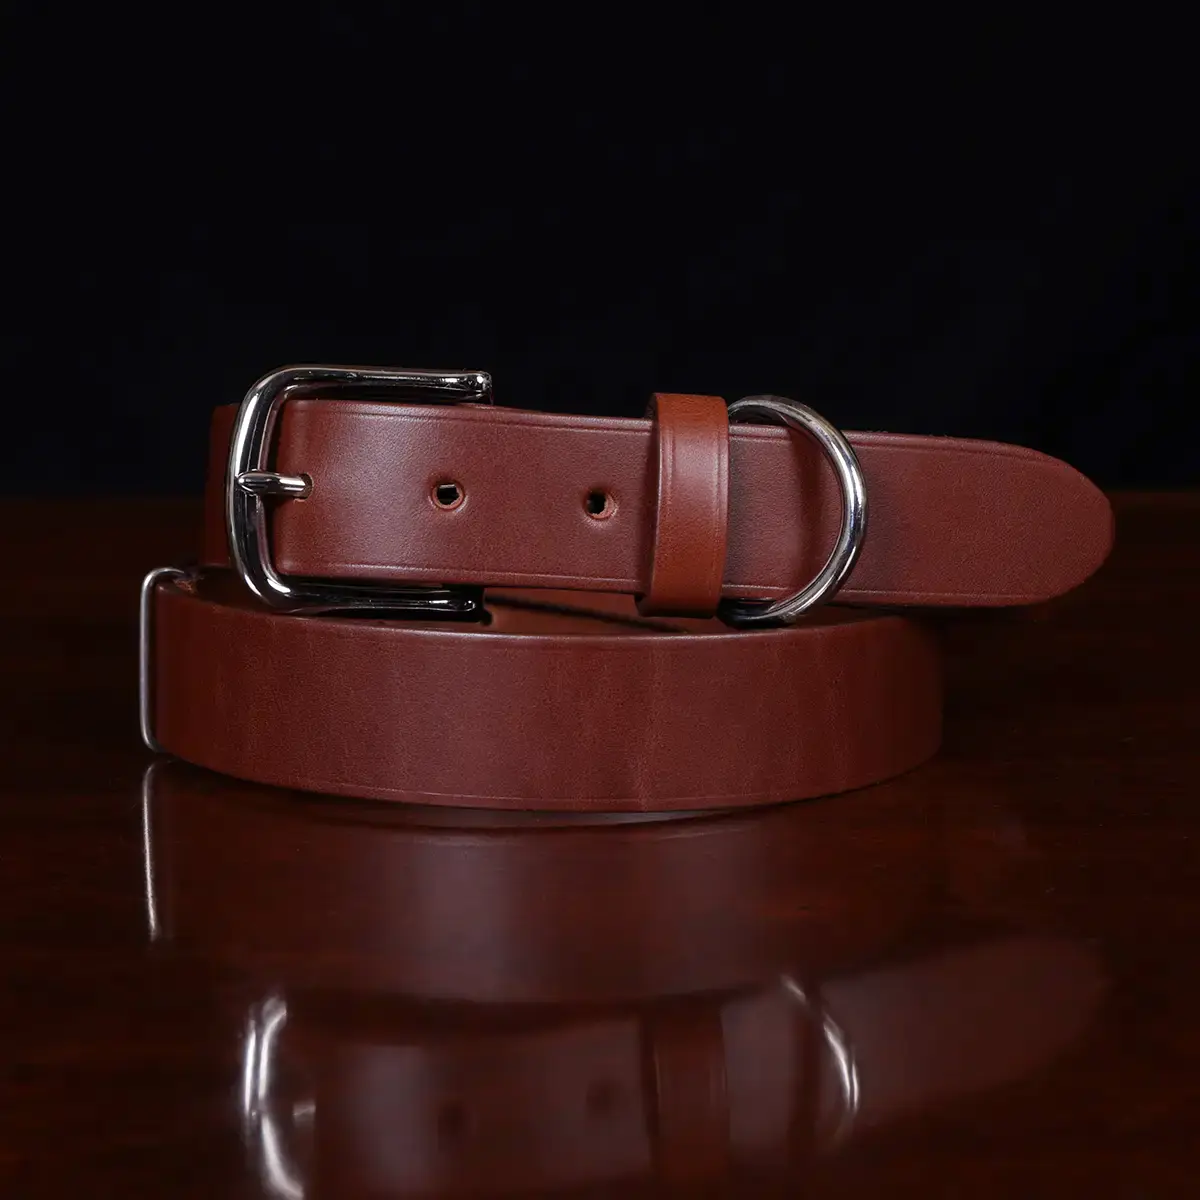 Discounted Size 32 Waist Belt Size 34 / 1 Inch Wide Belt/ 